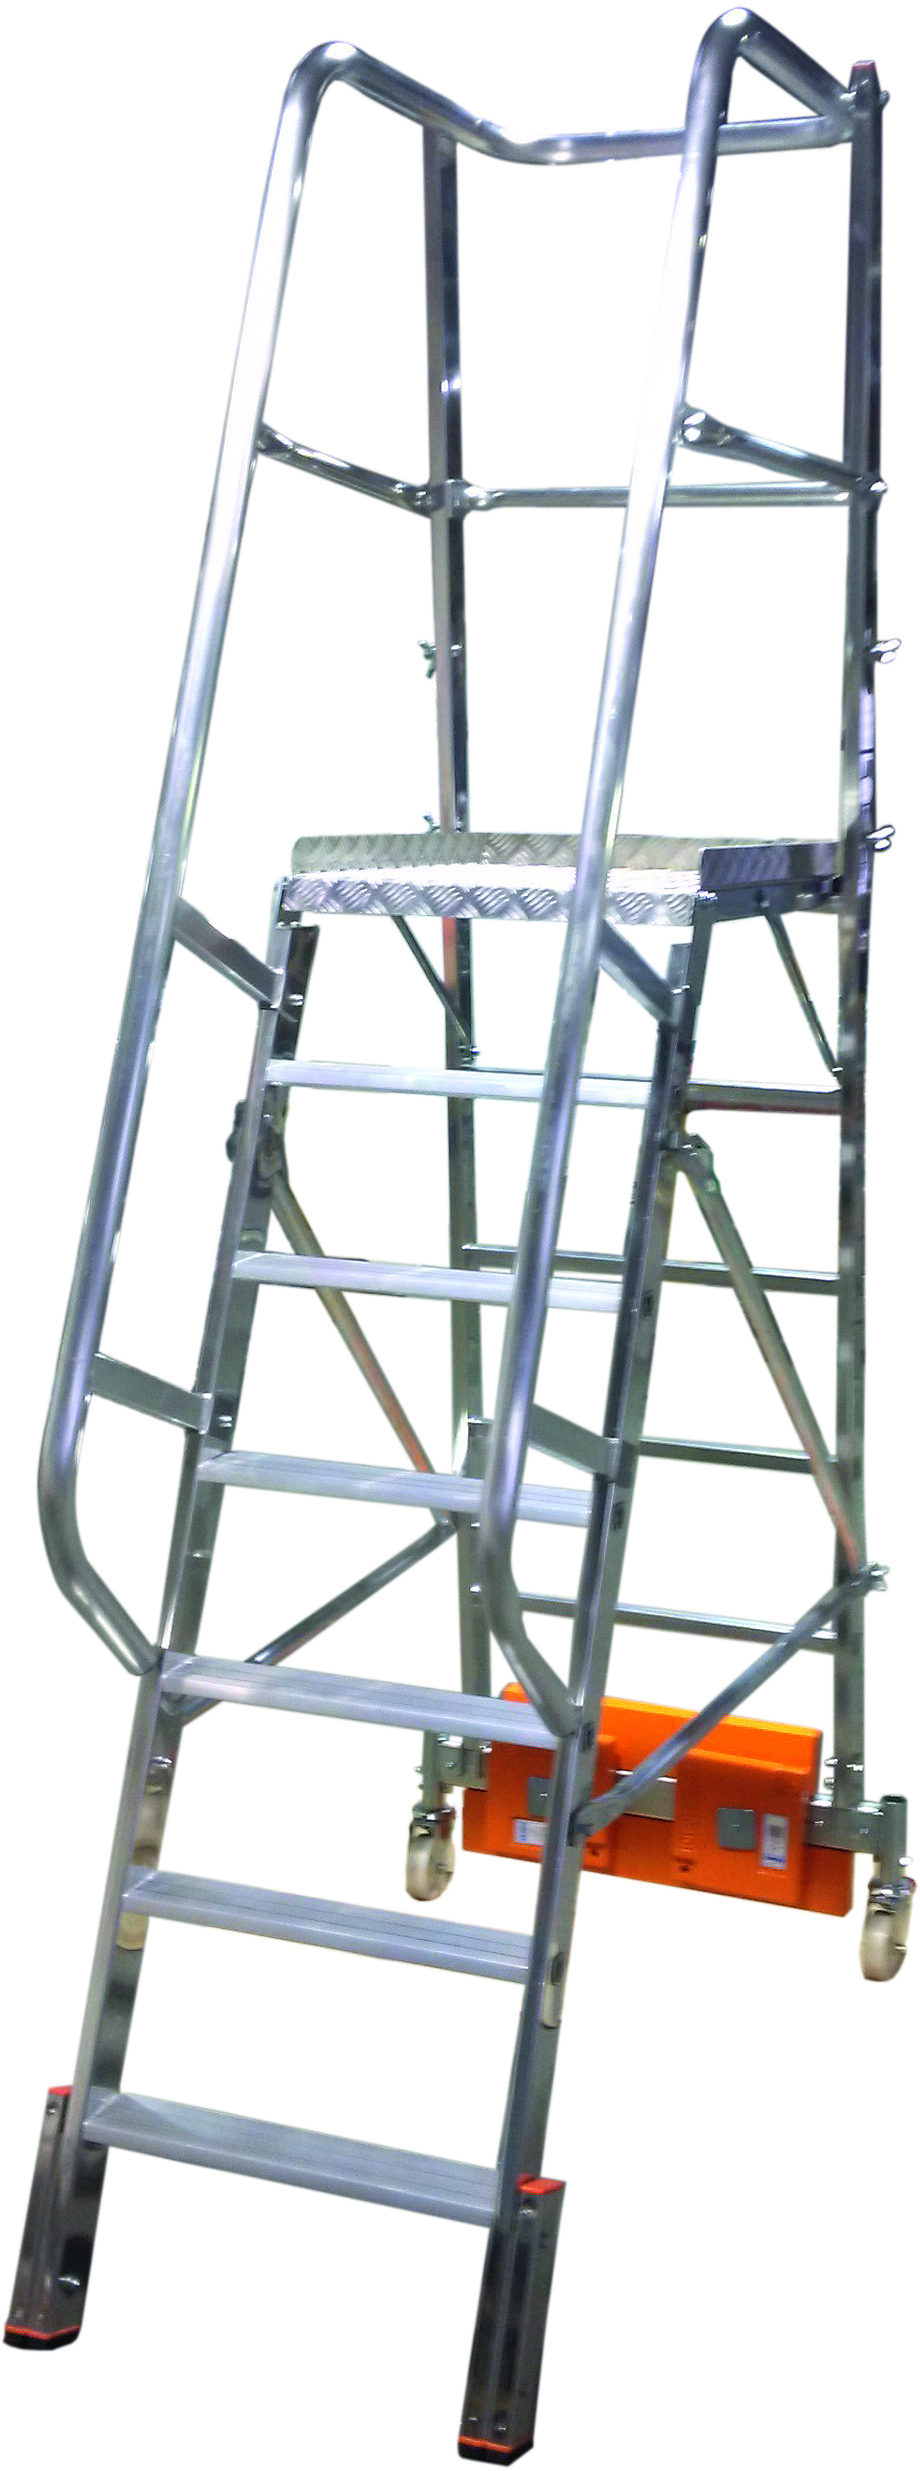 Podestleiter Vario kompakt 5 Sprossen/Stufen